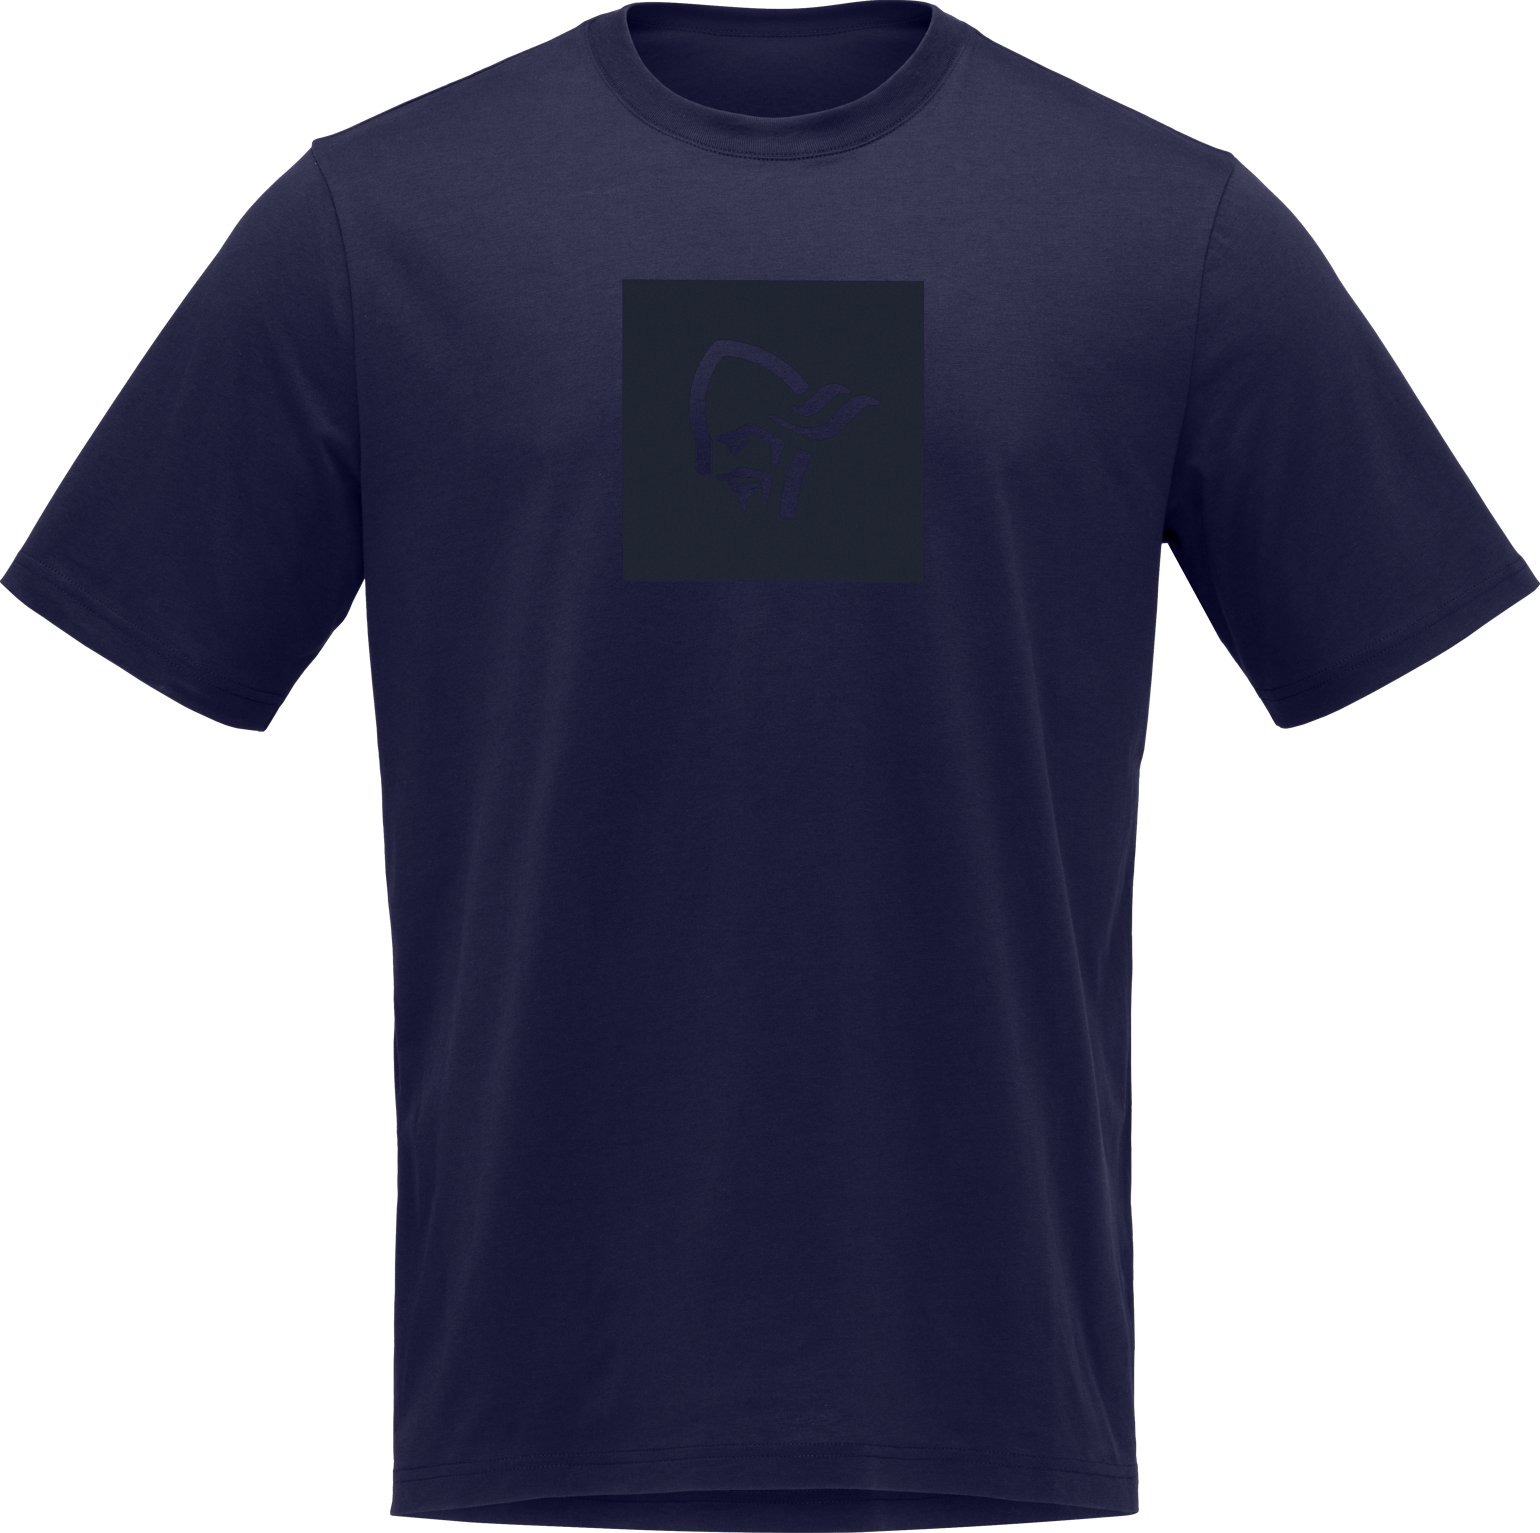 Norrøna Men's /29 Cotton Square Viking T-Shirt Indigo Night